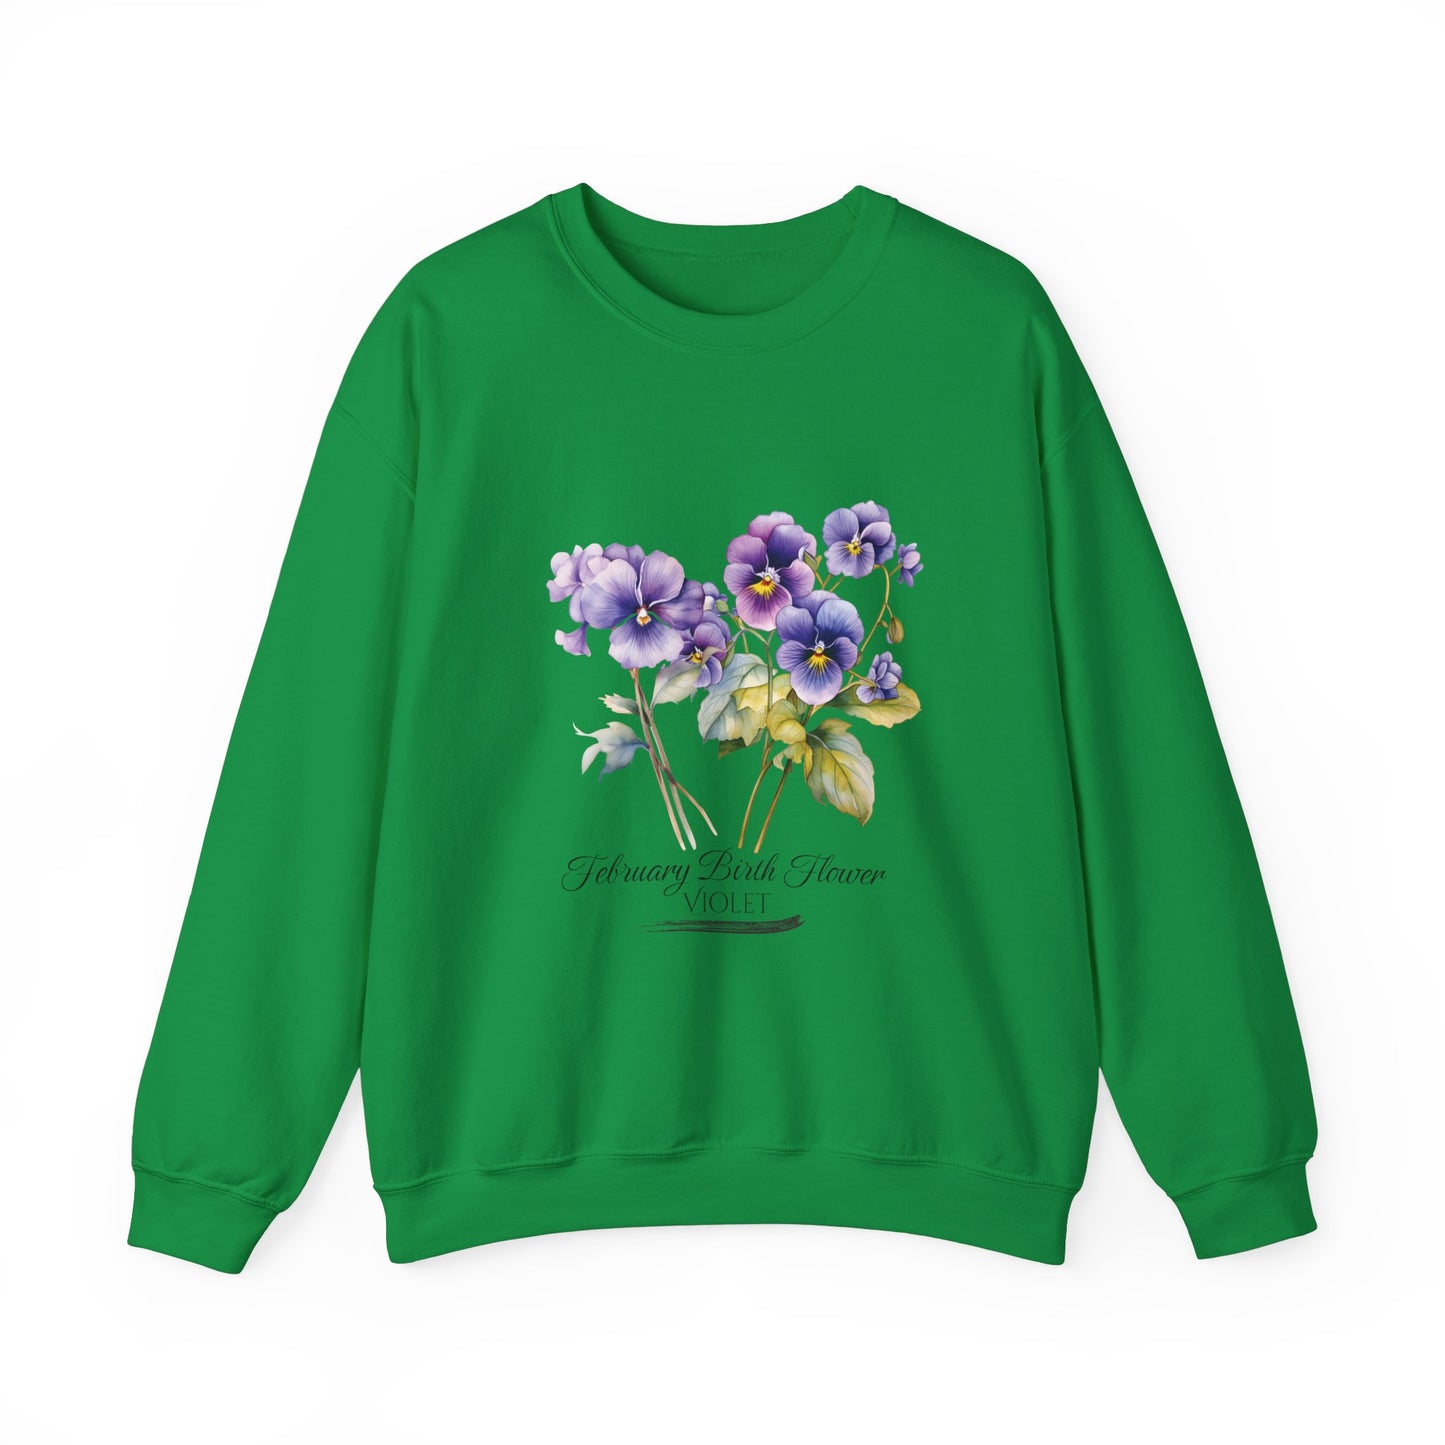 February Birth Flowers (Violet) - Unisex Heavy Blend™ Crewneck Sweatshirt